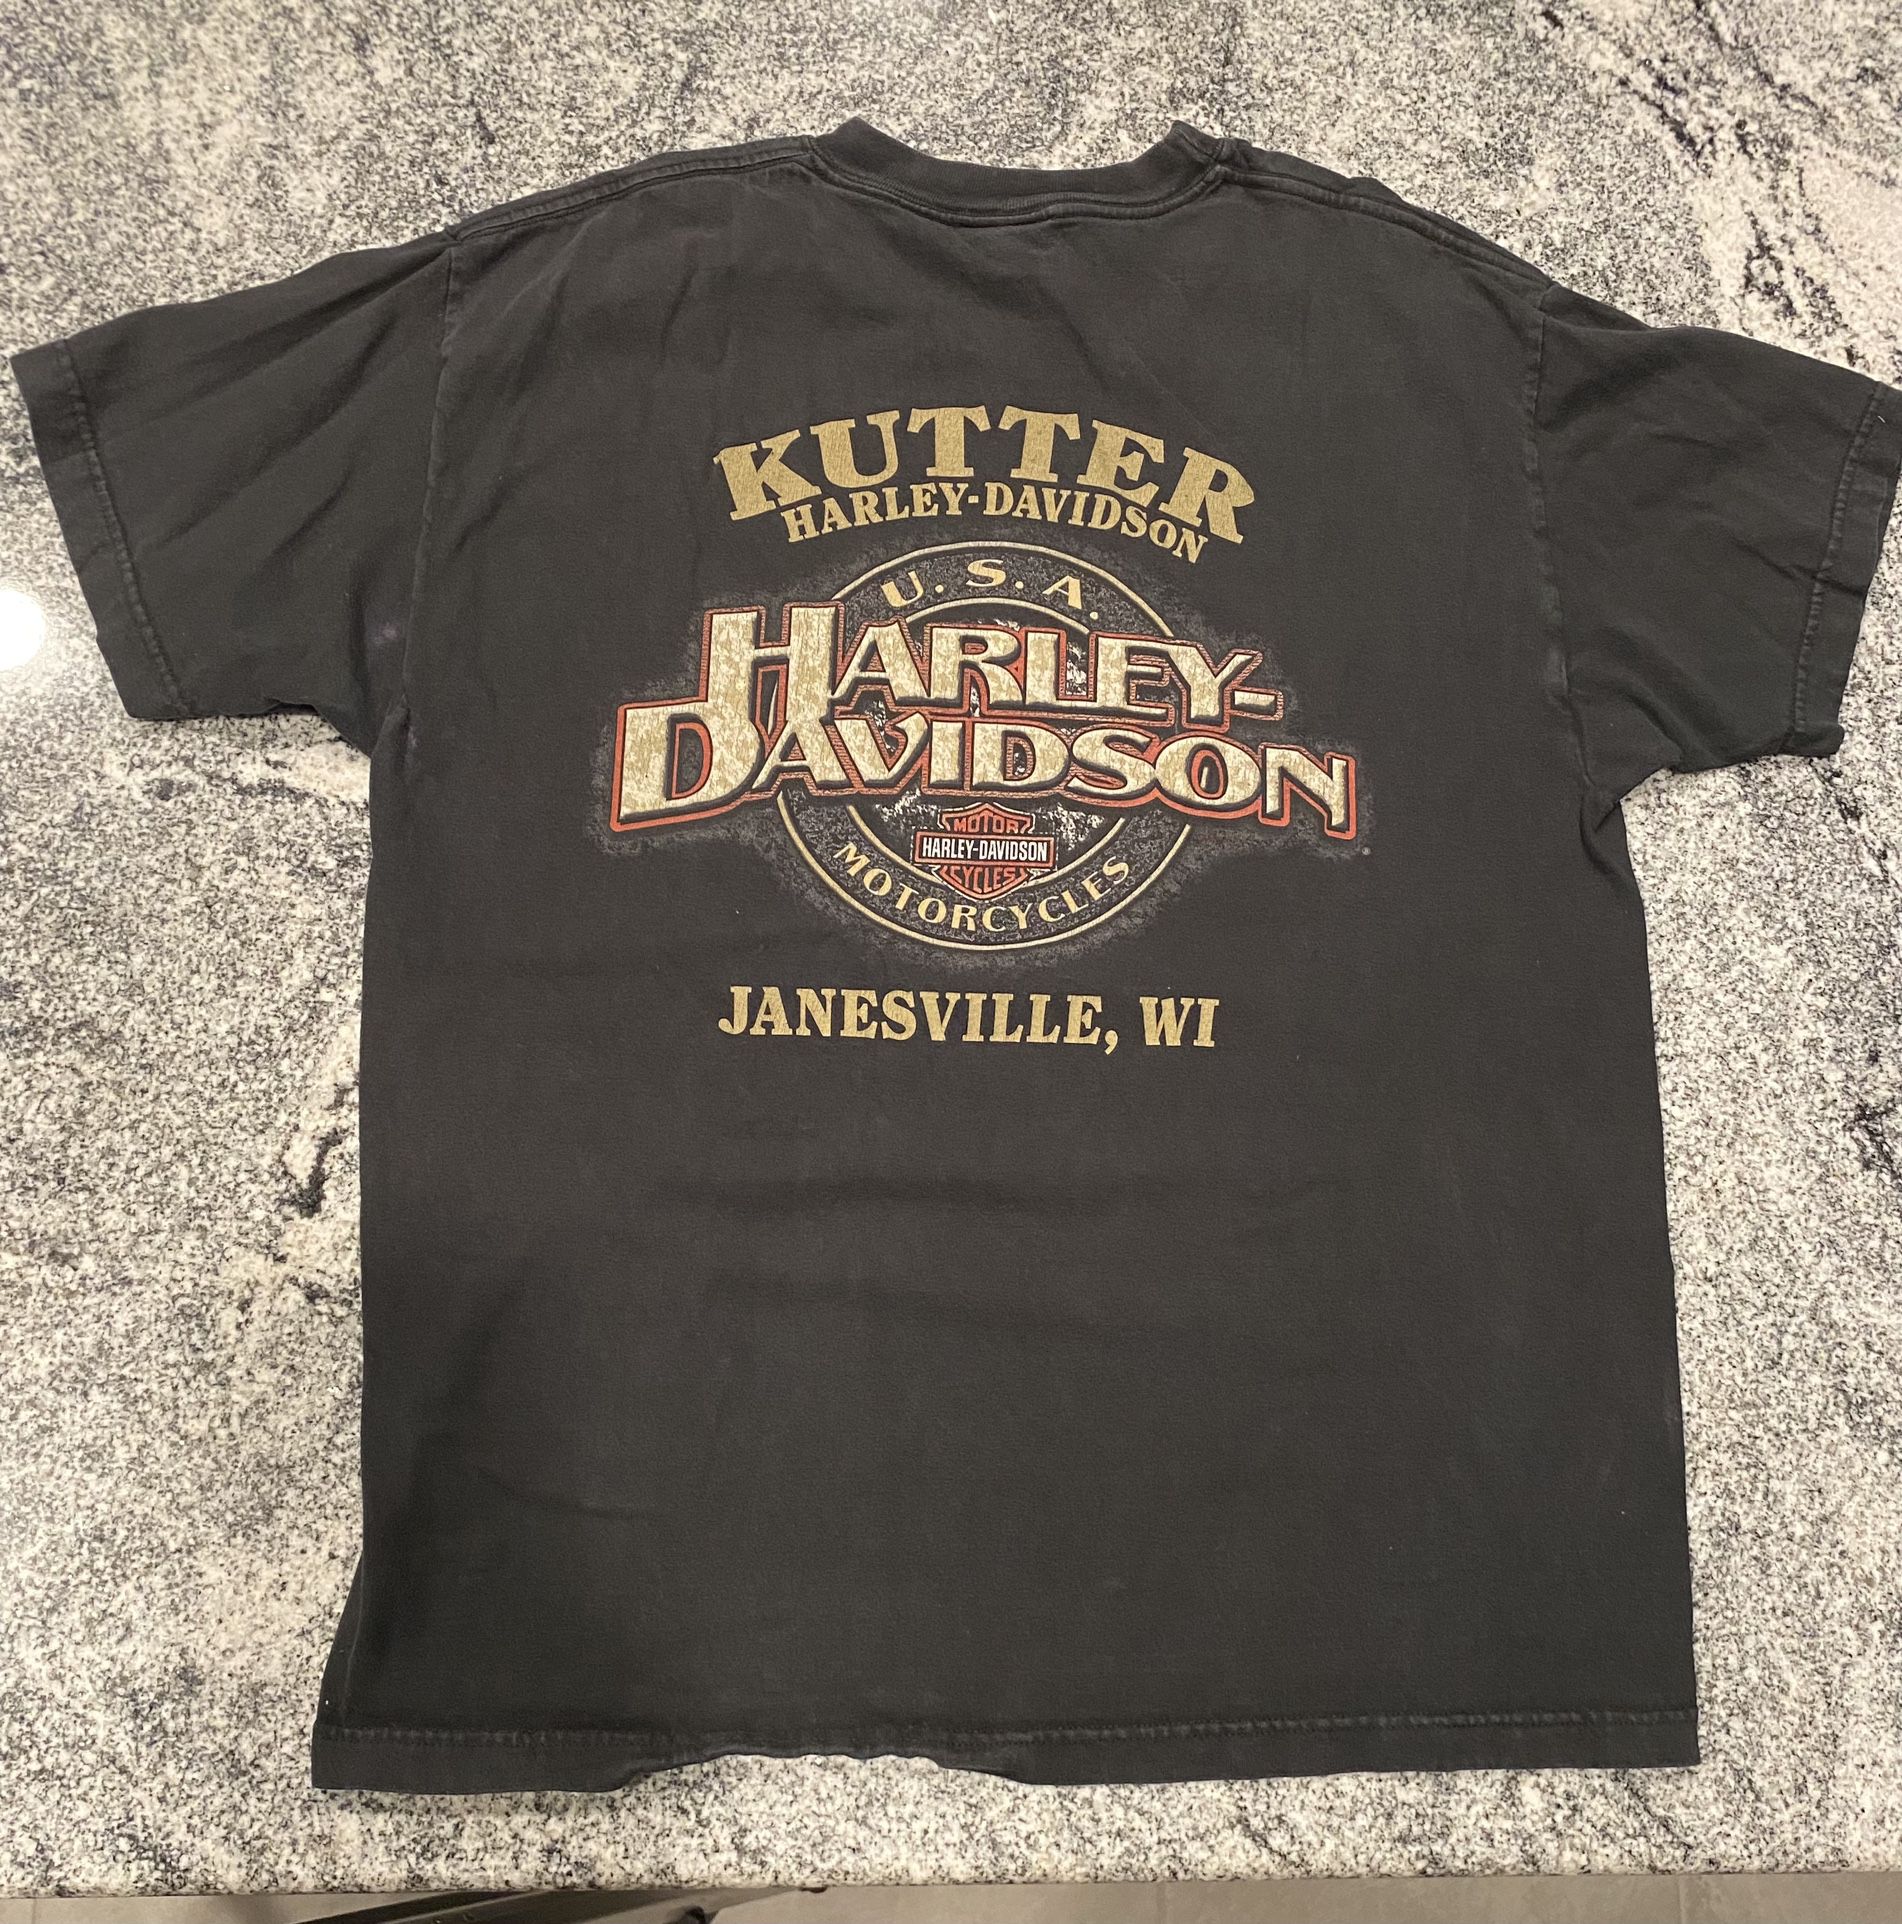 Vintage Harley Davidson Kutter Janesville WI Shirt Motorcycle Men's Size Large. No rips or holes